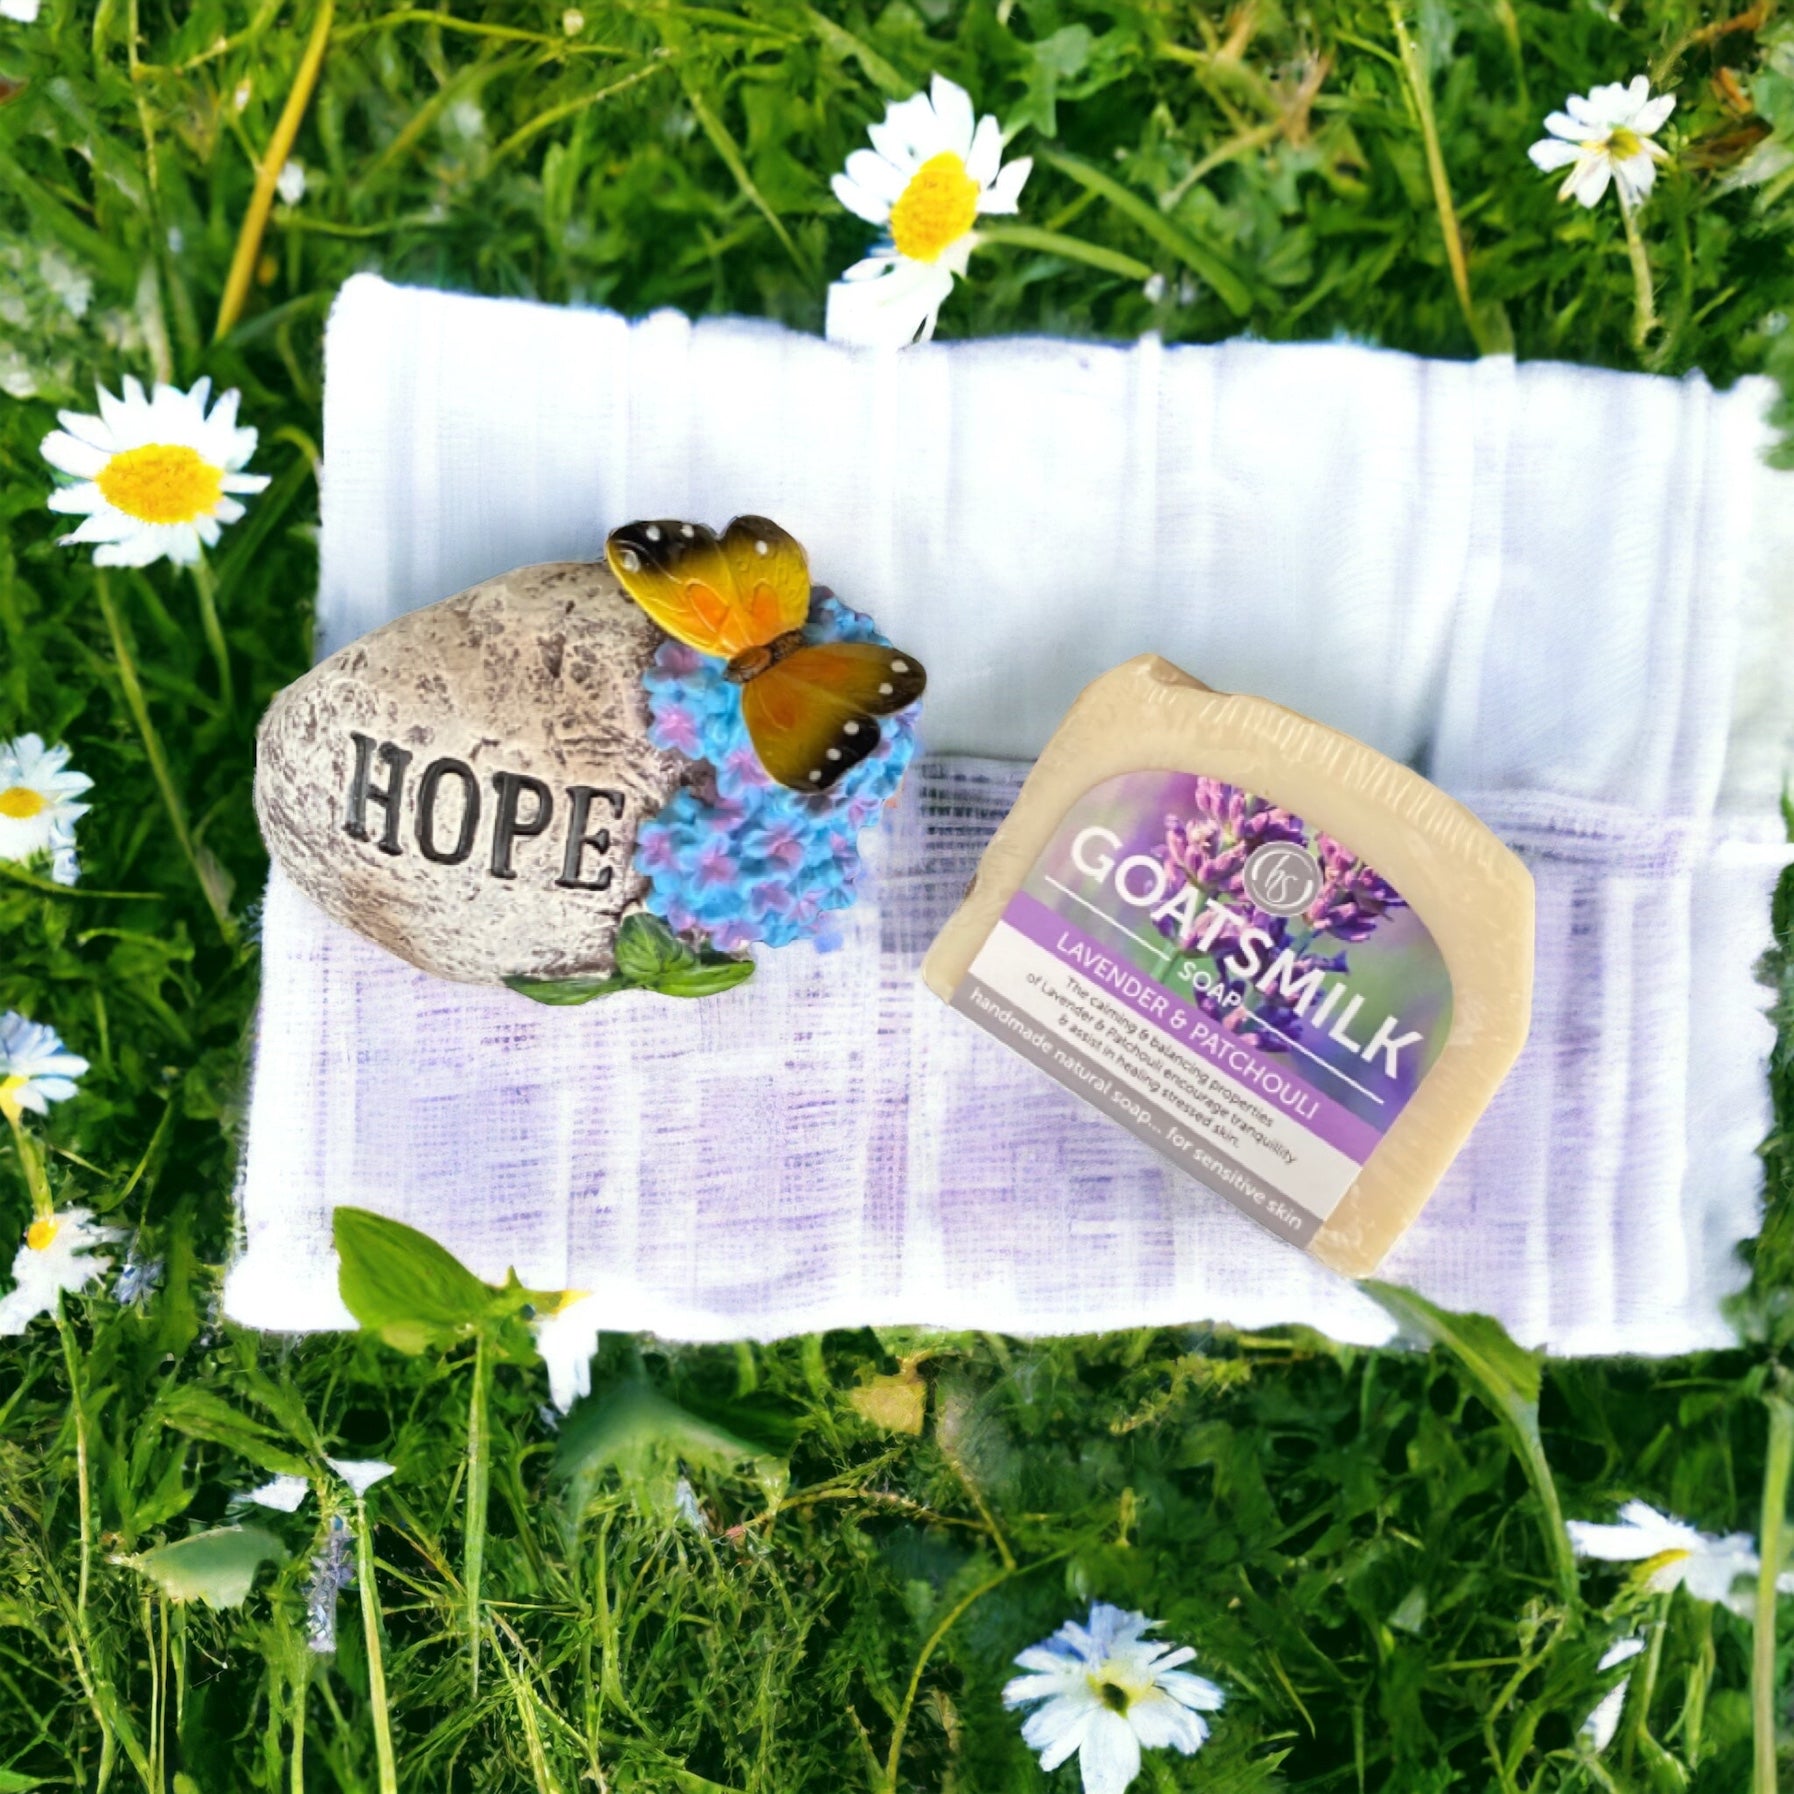 Garden Hope Gardener Stone Goatmilk Soap Gift - The Renmy Store Homewares & Gifts 